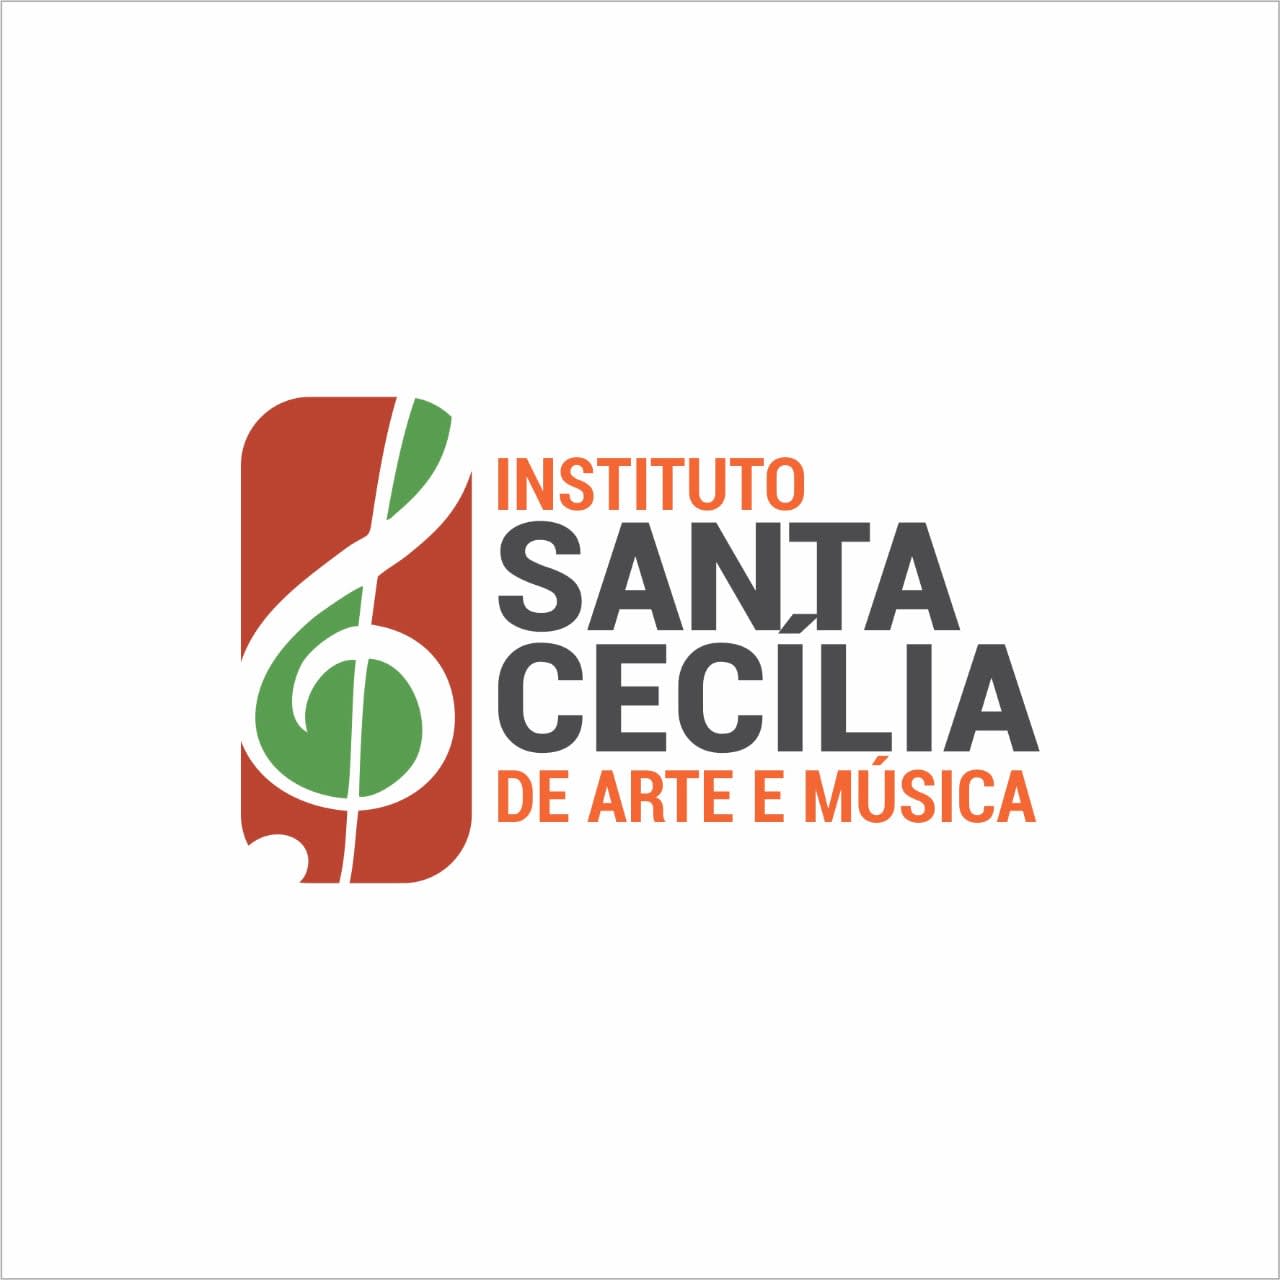 Instituto de Arte e Música Santa Cecília